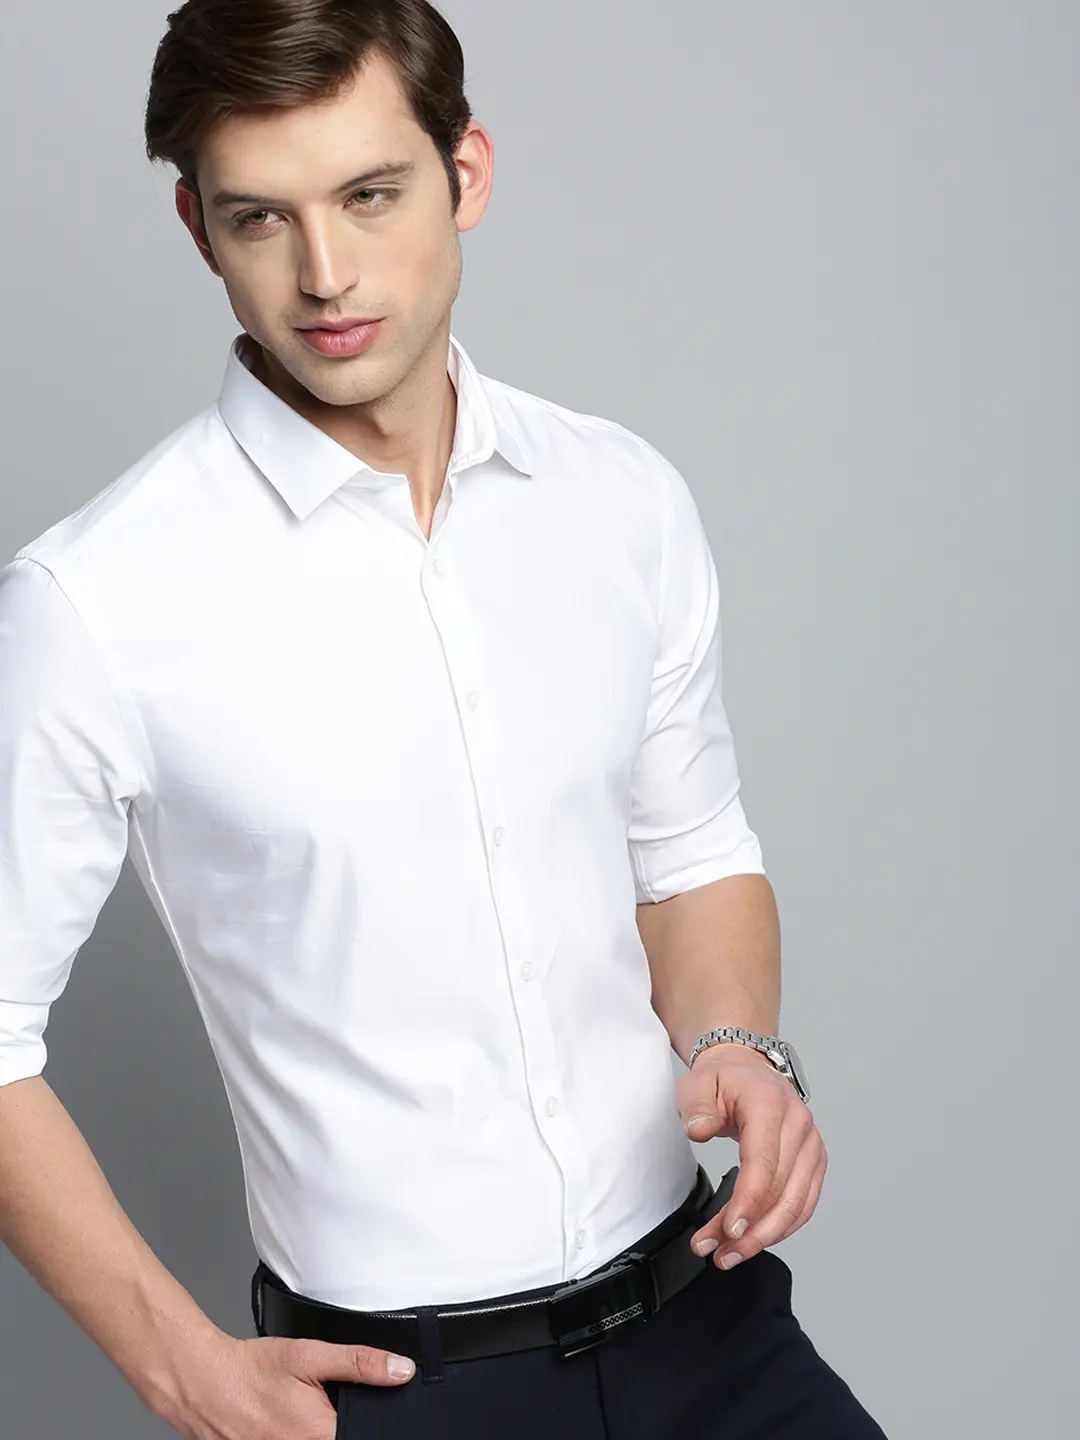 SHOWOFF Men's Spread Collar Solid White Smart Shirt